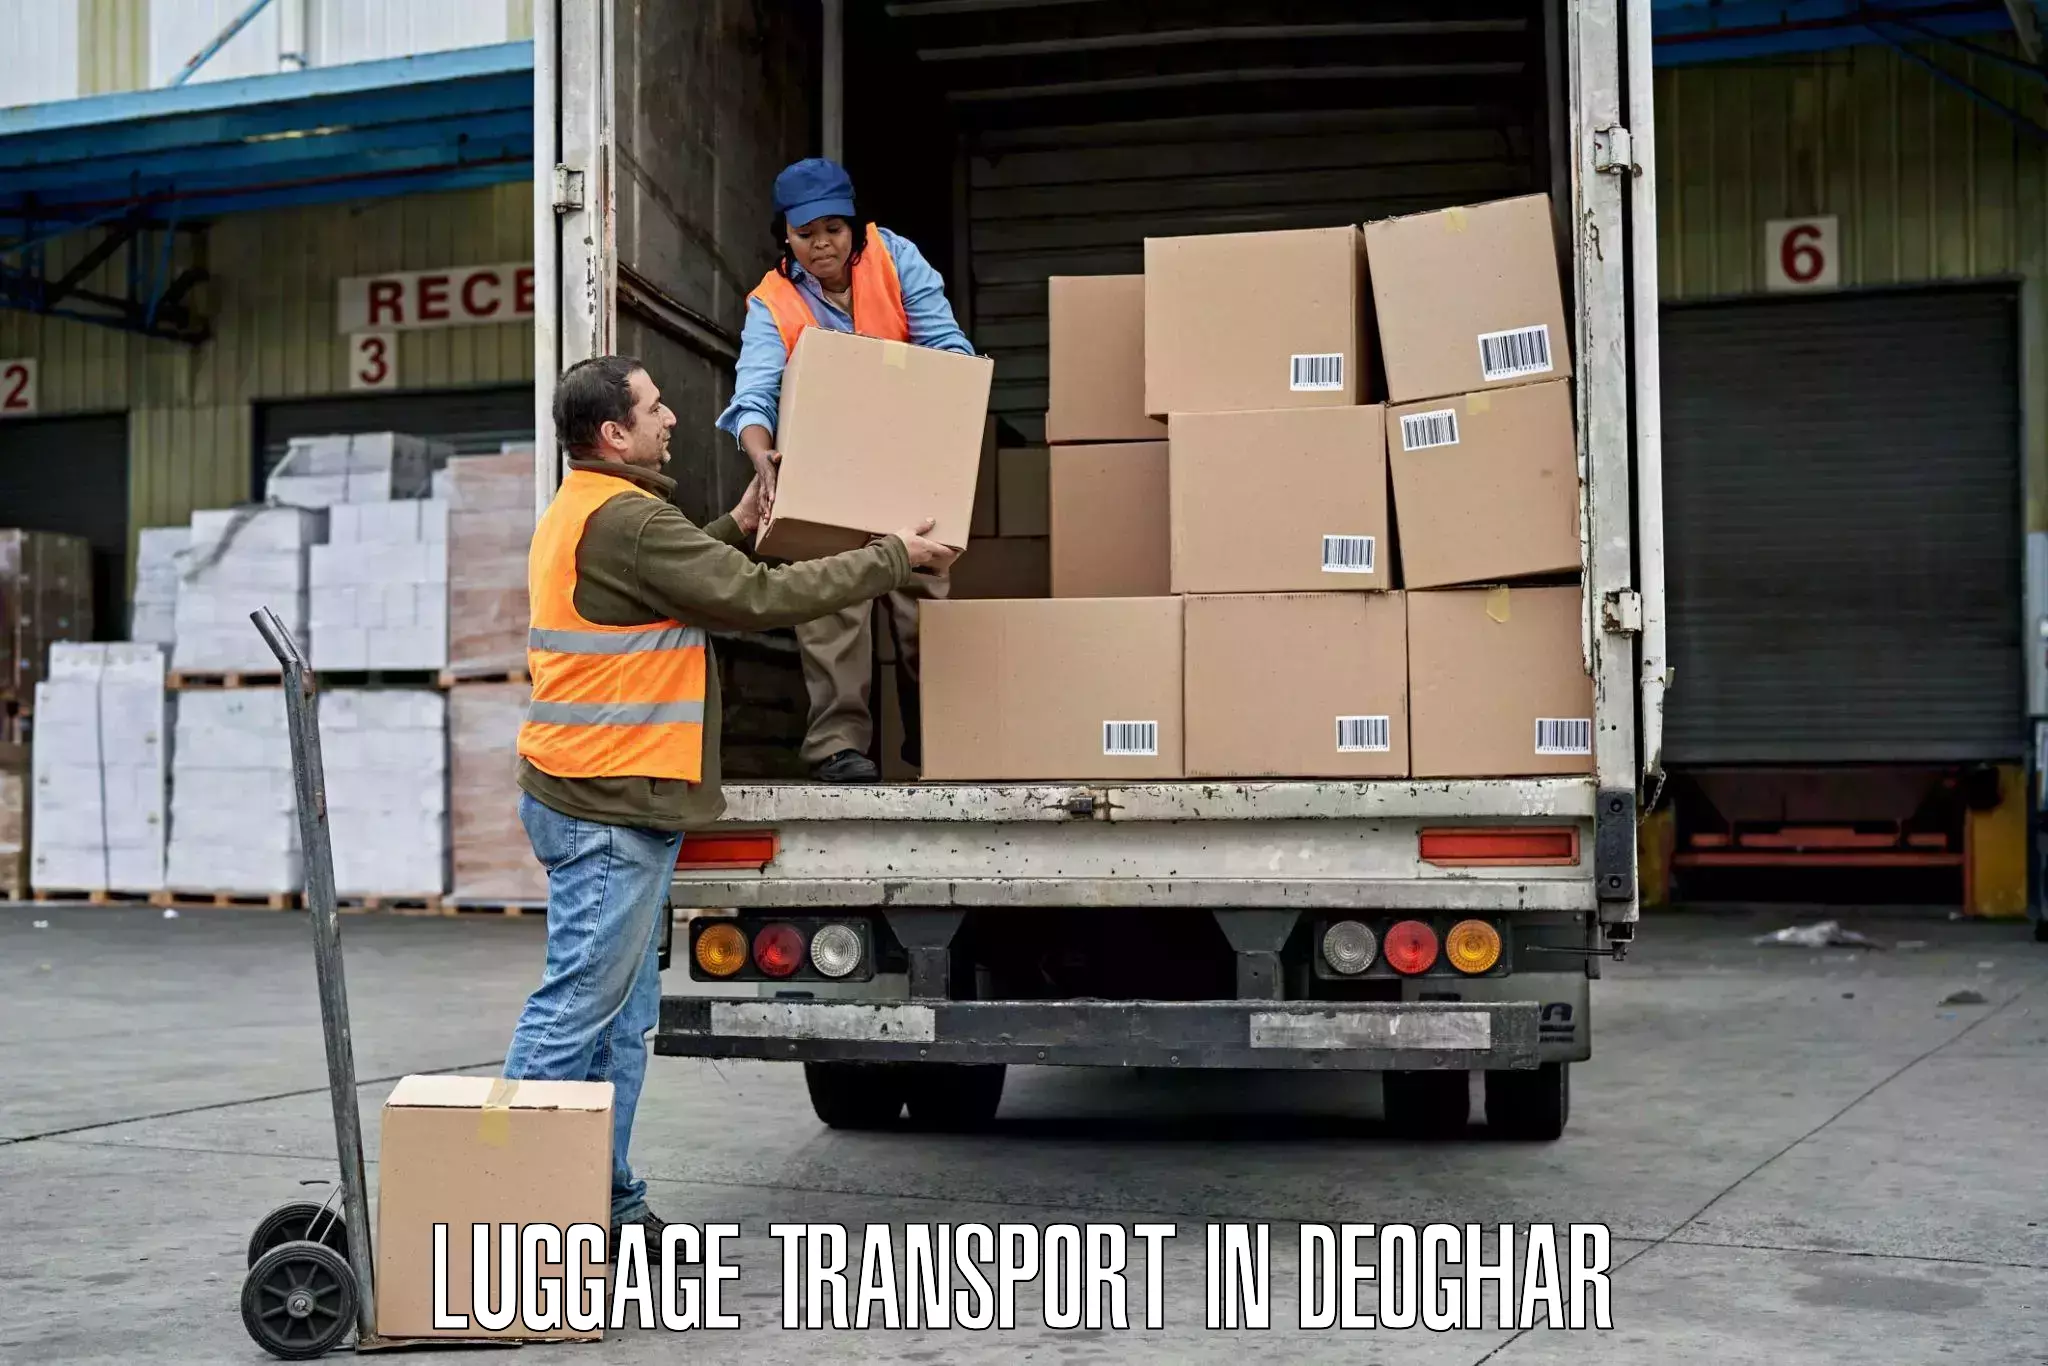 Luggage transfer service in Deoghar